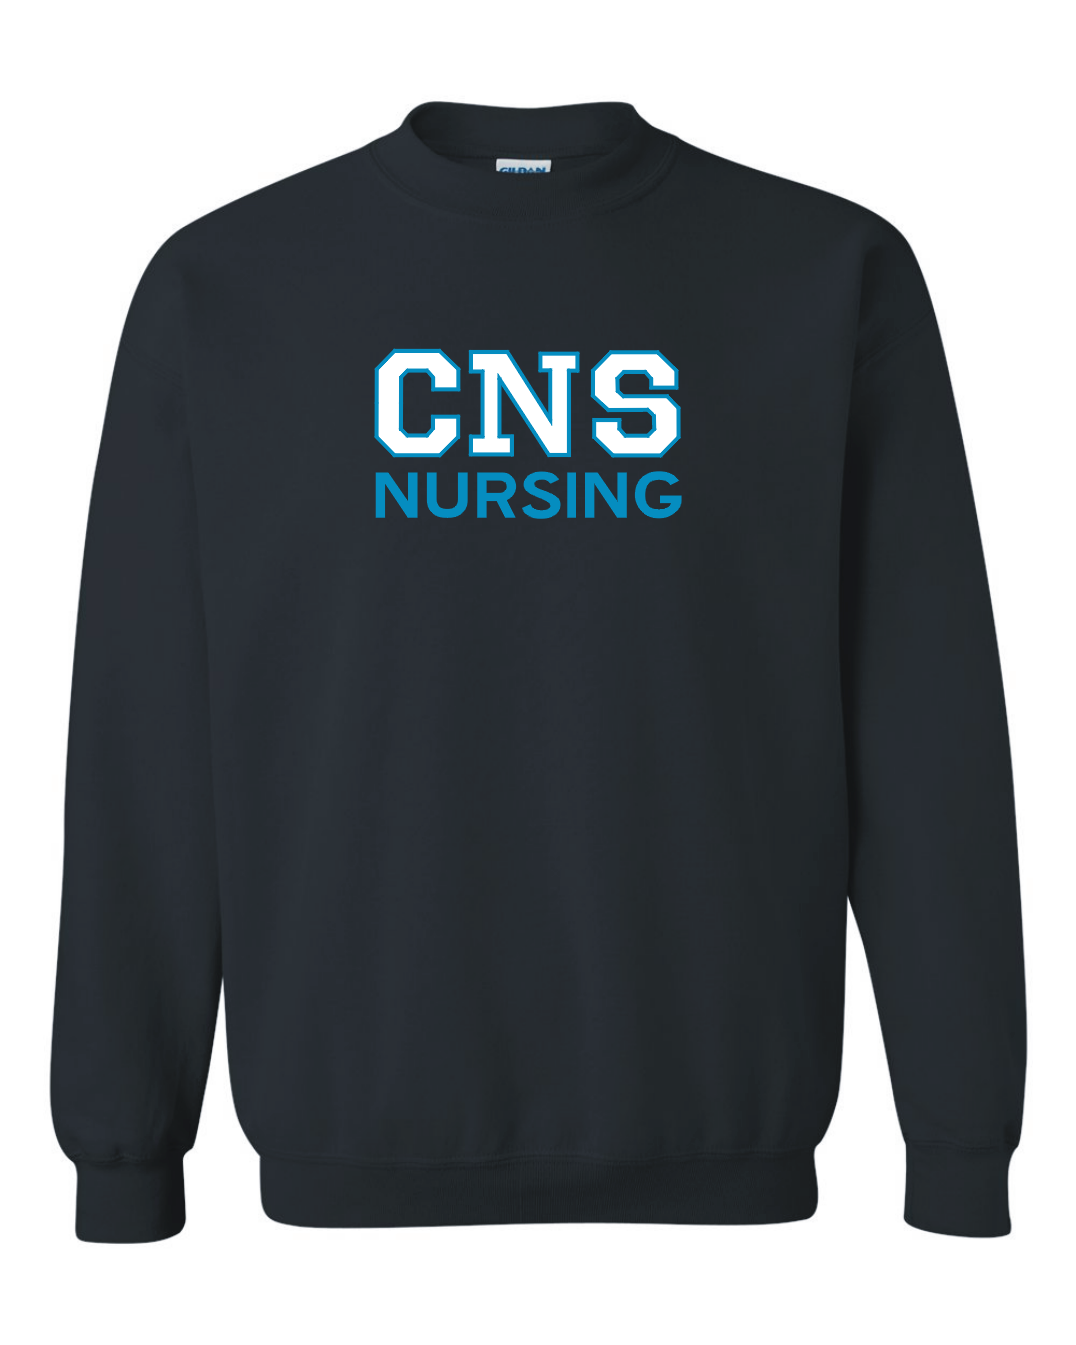 Nursing Sweatshirts